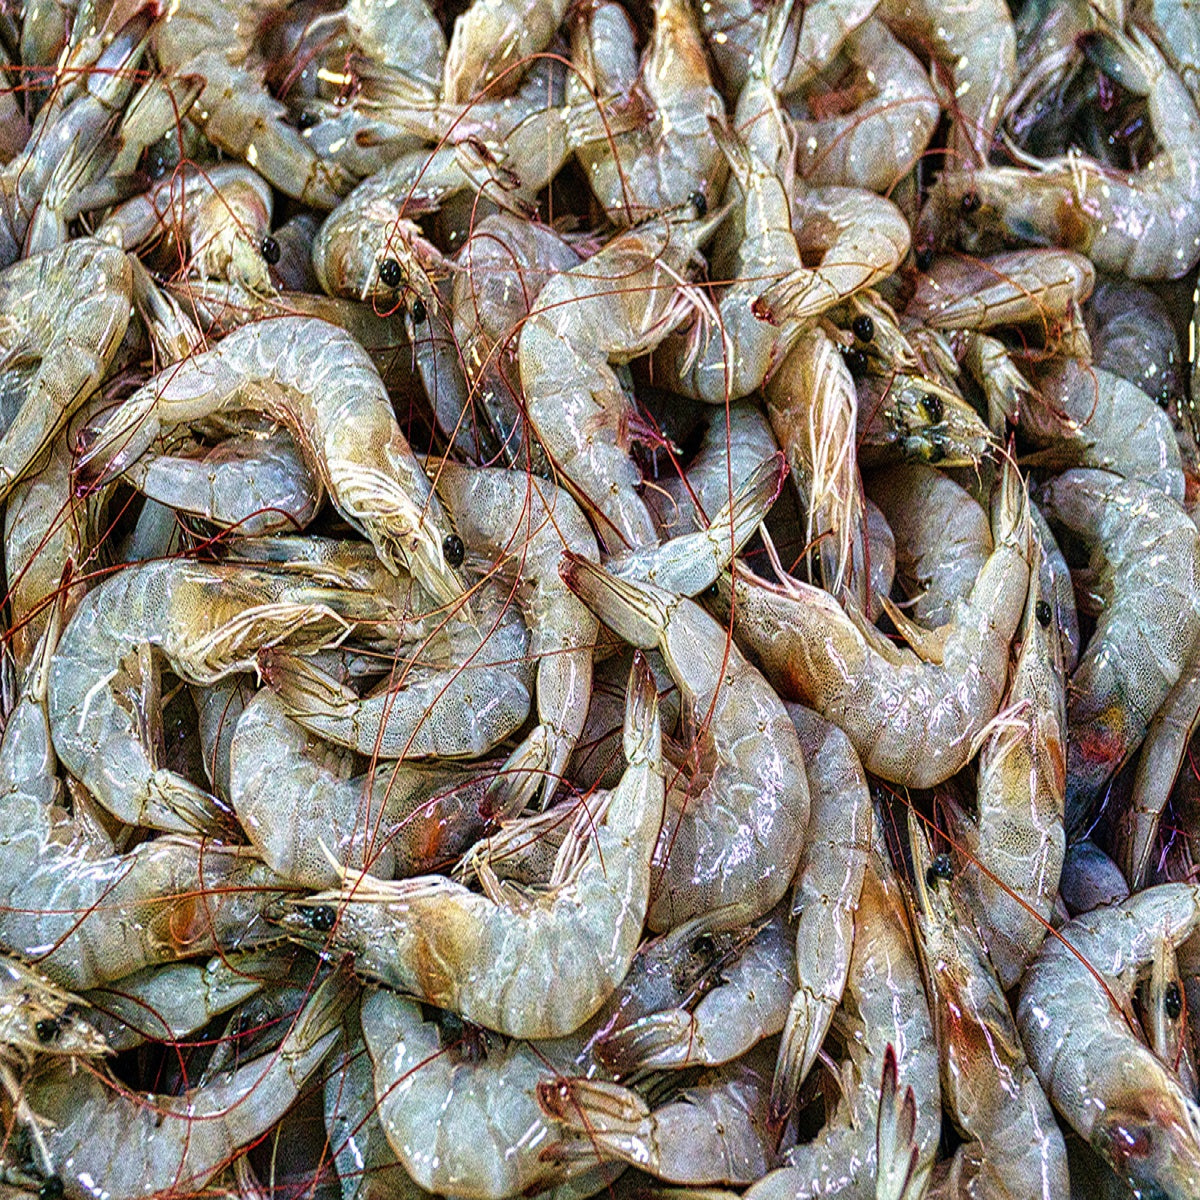 Freshwater prawns- Doof Meat